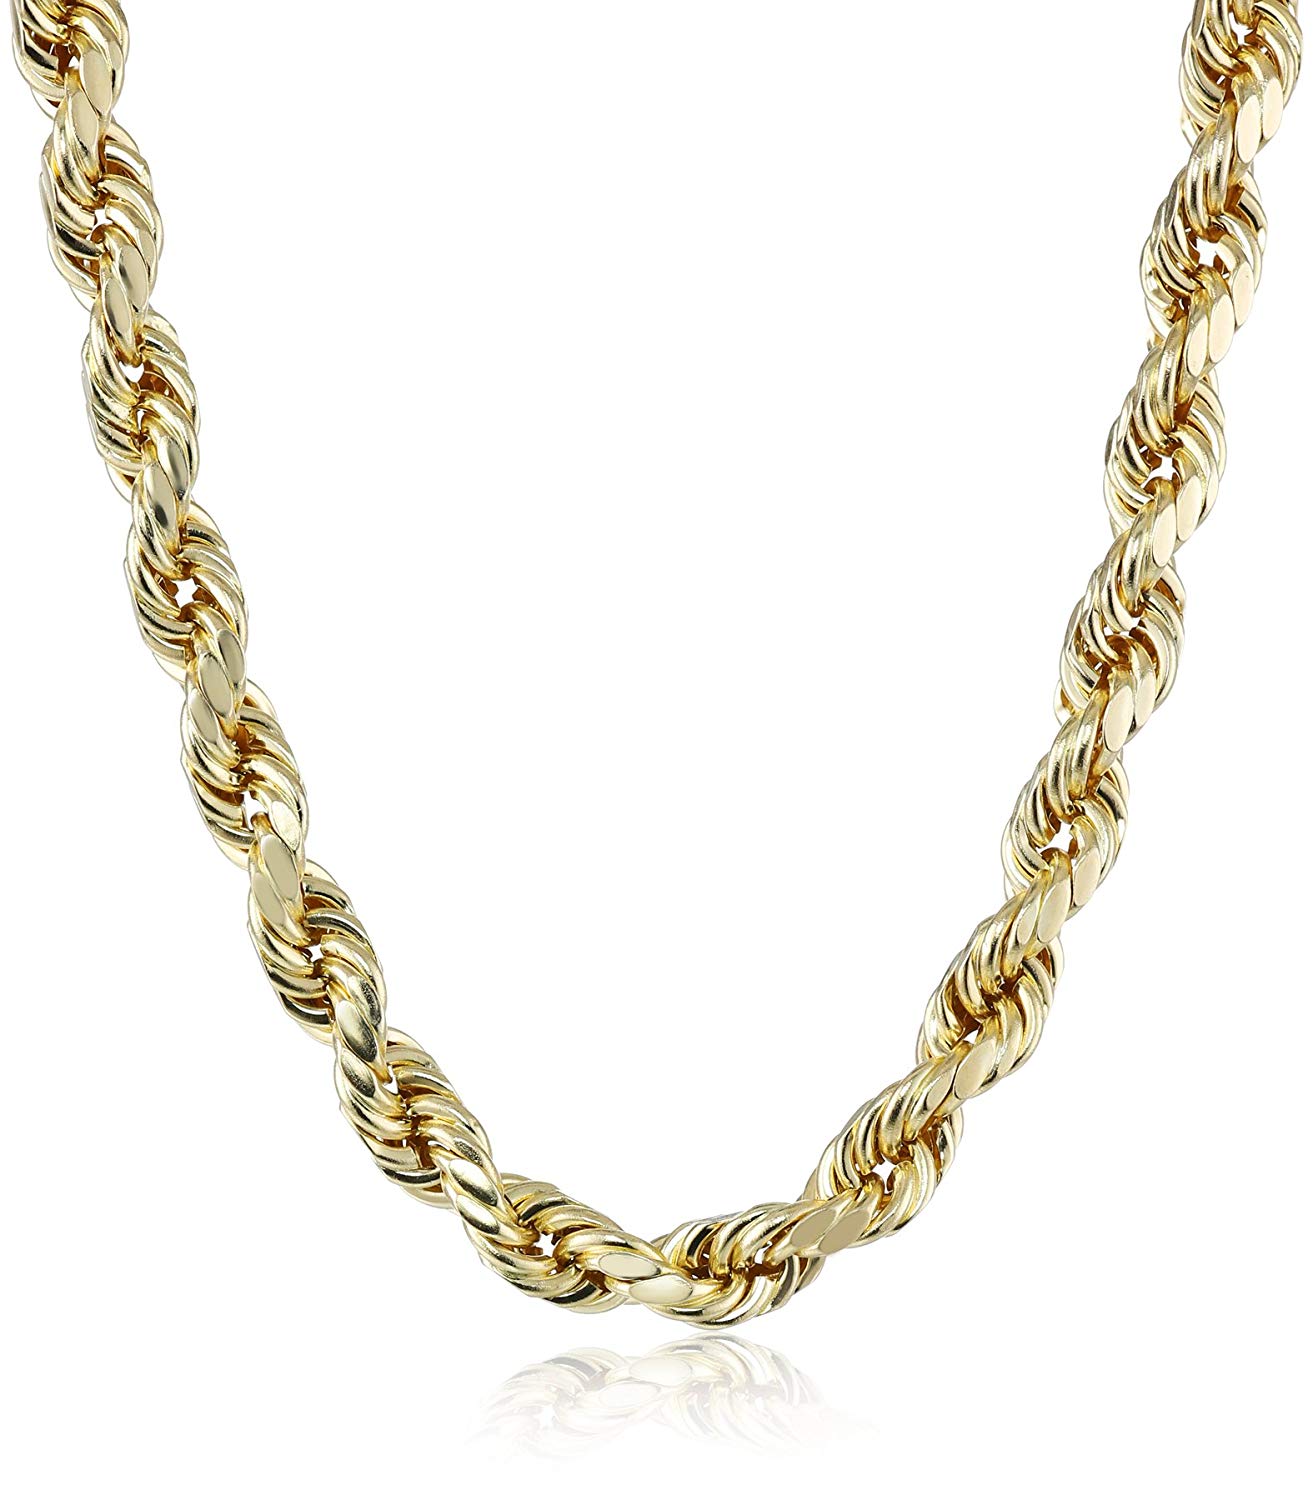 Chain clipart gold chain. Men s k yellow